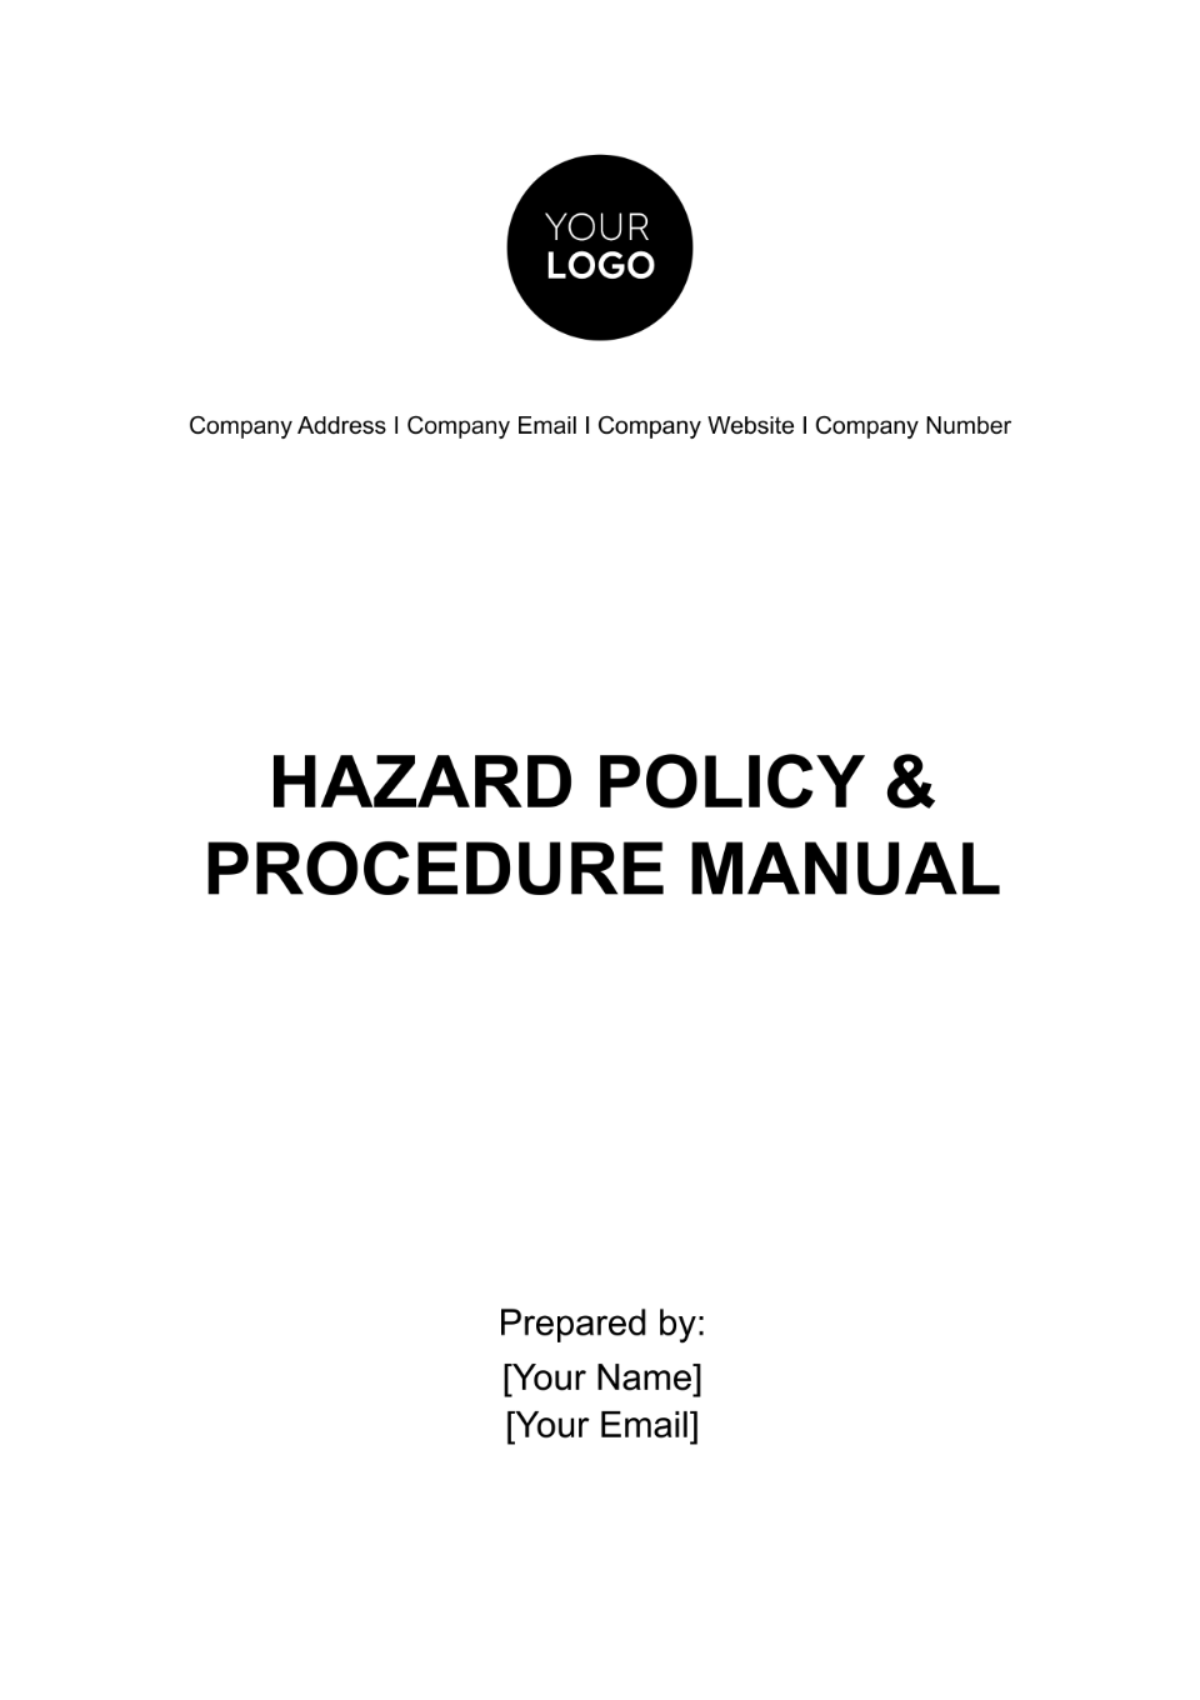 Free Hazard Policy & Procedure Manual Template